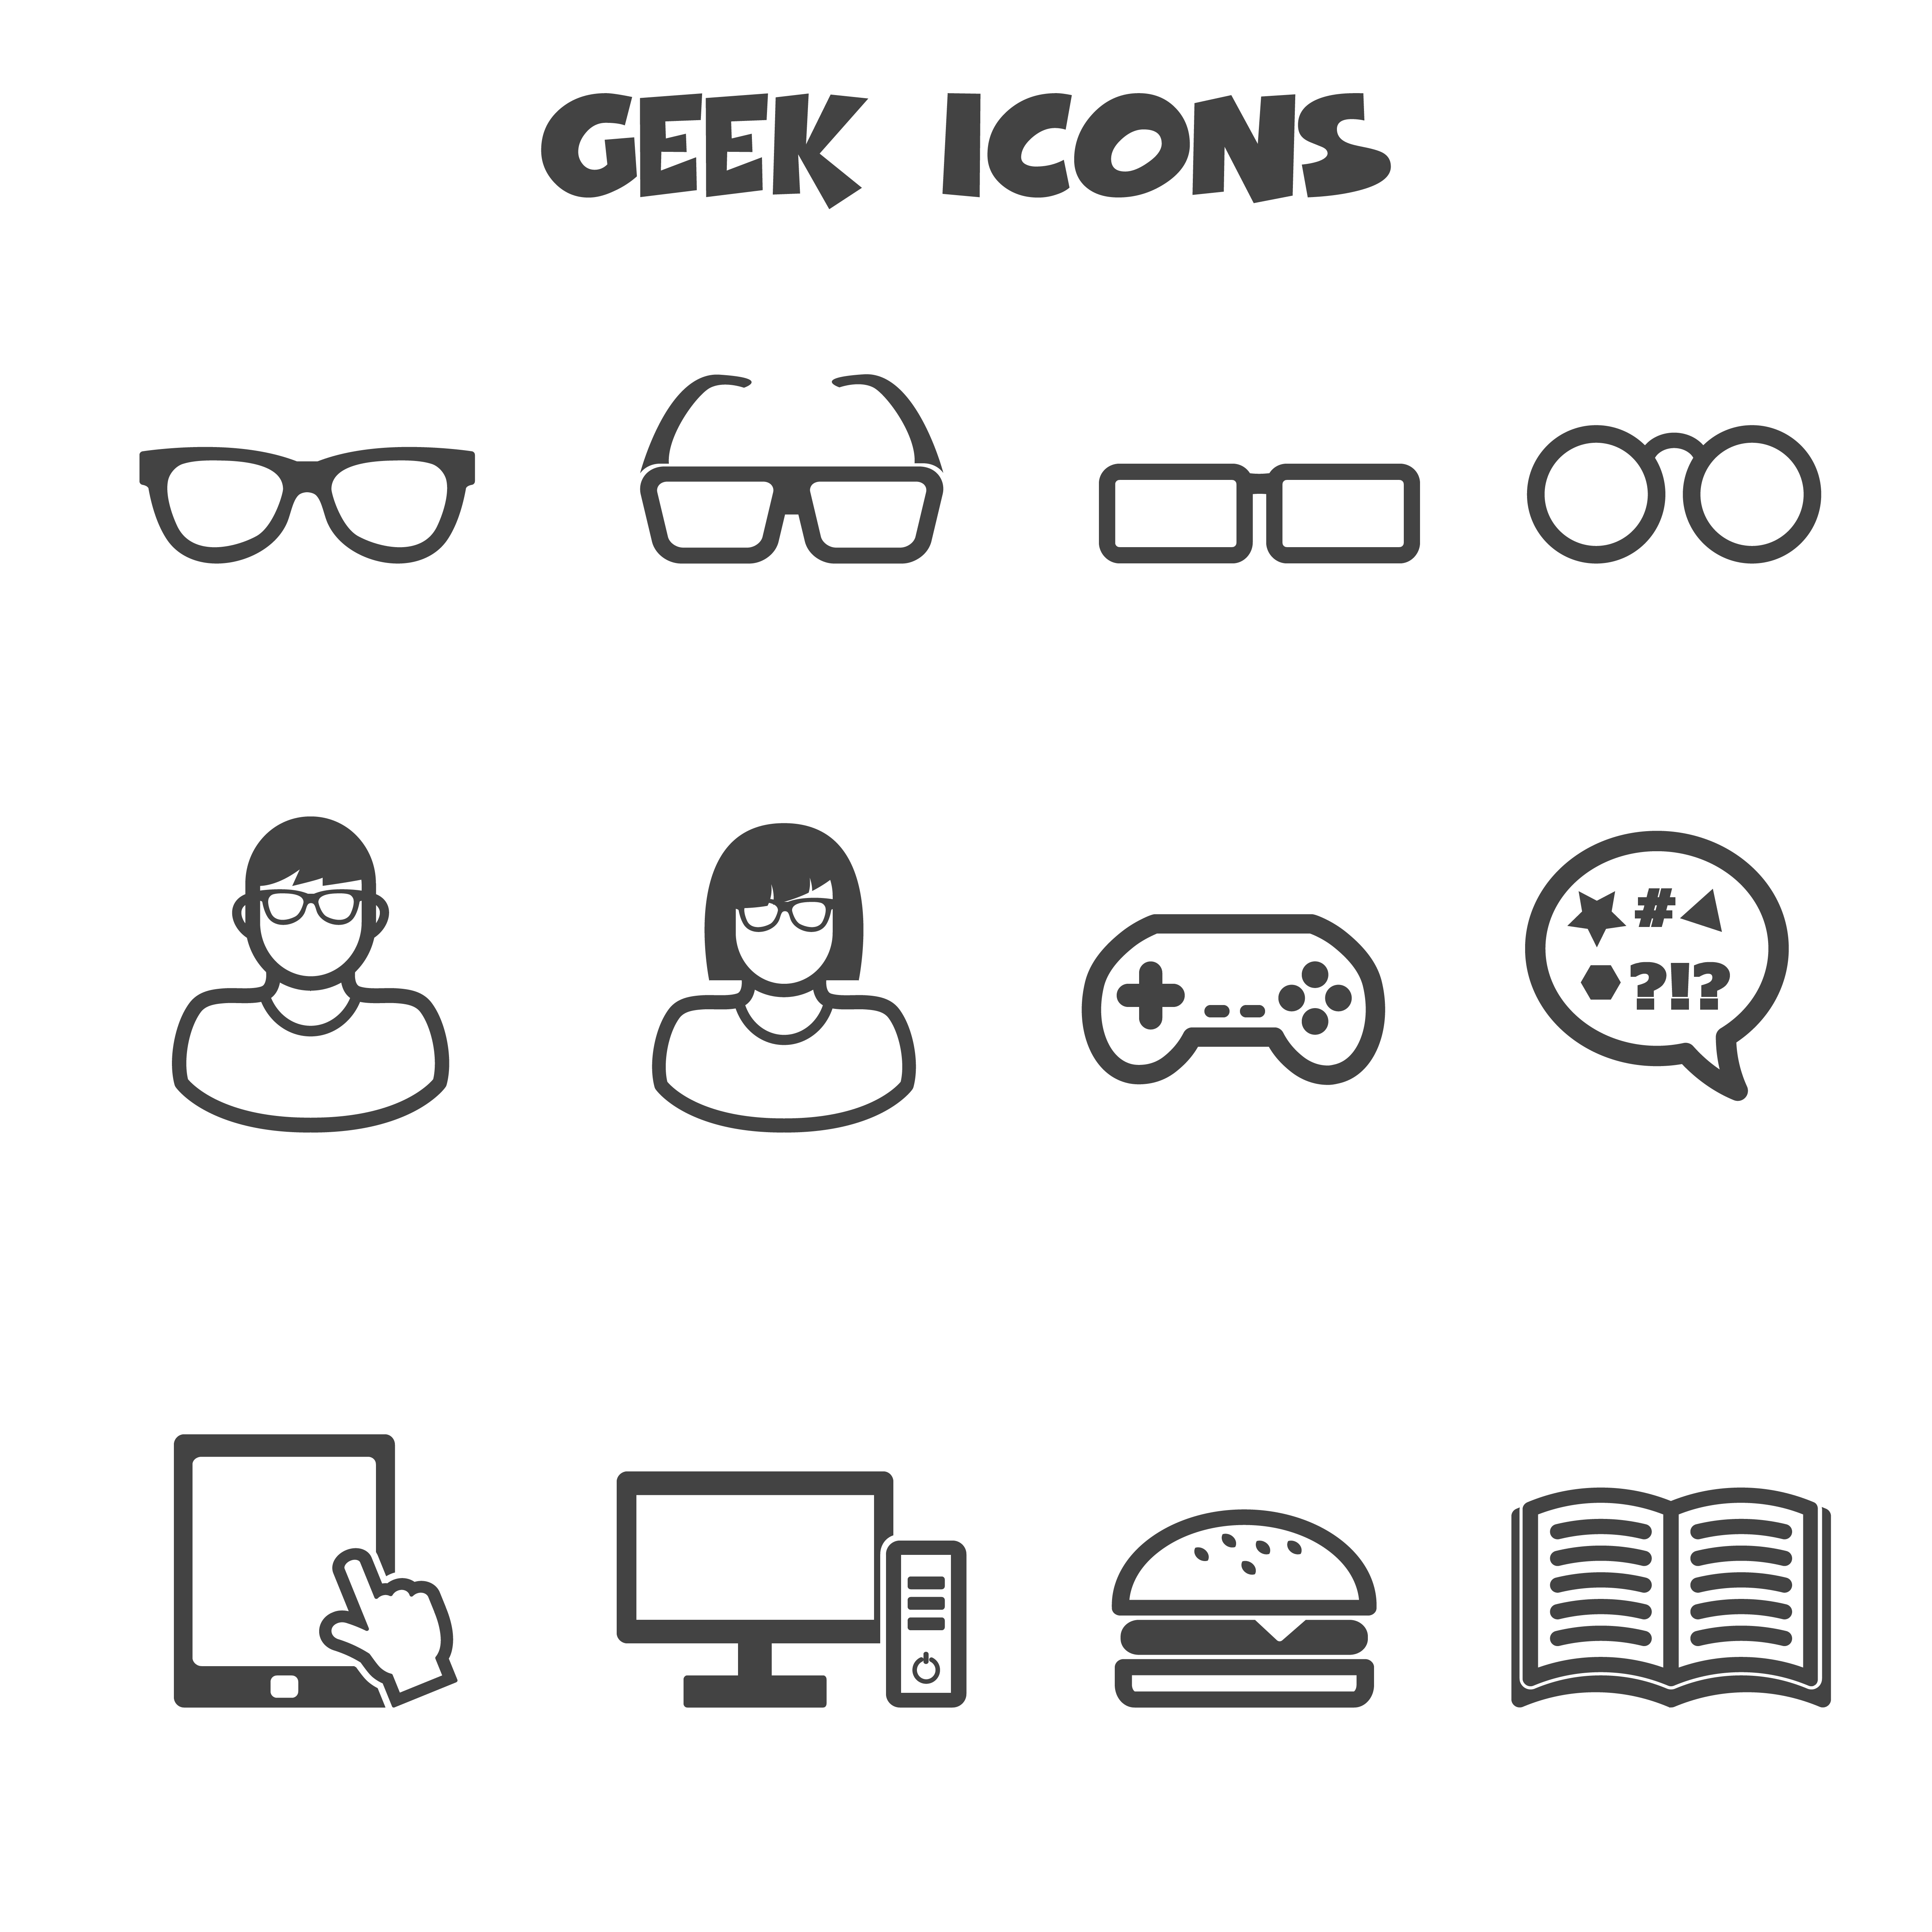 Download geek icons symbol - Download Free Vectors, Clipart ...